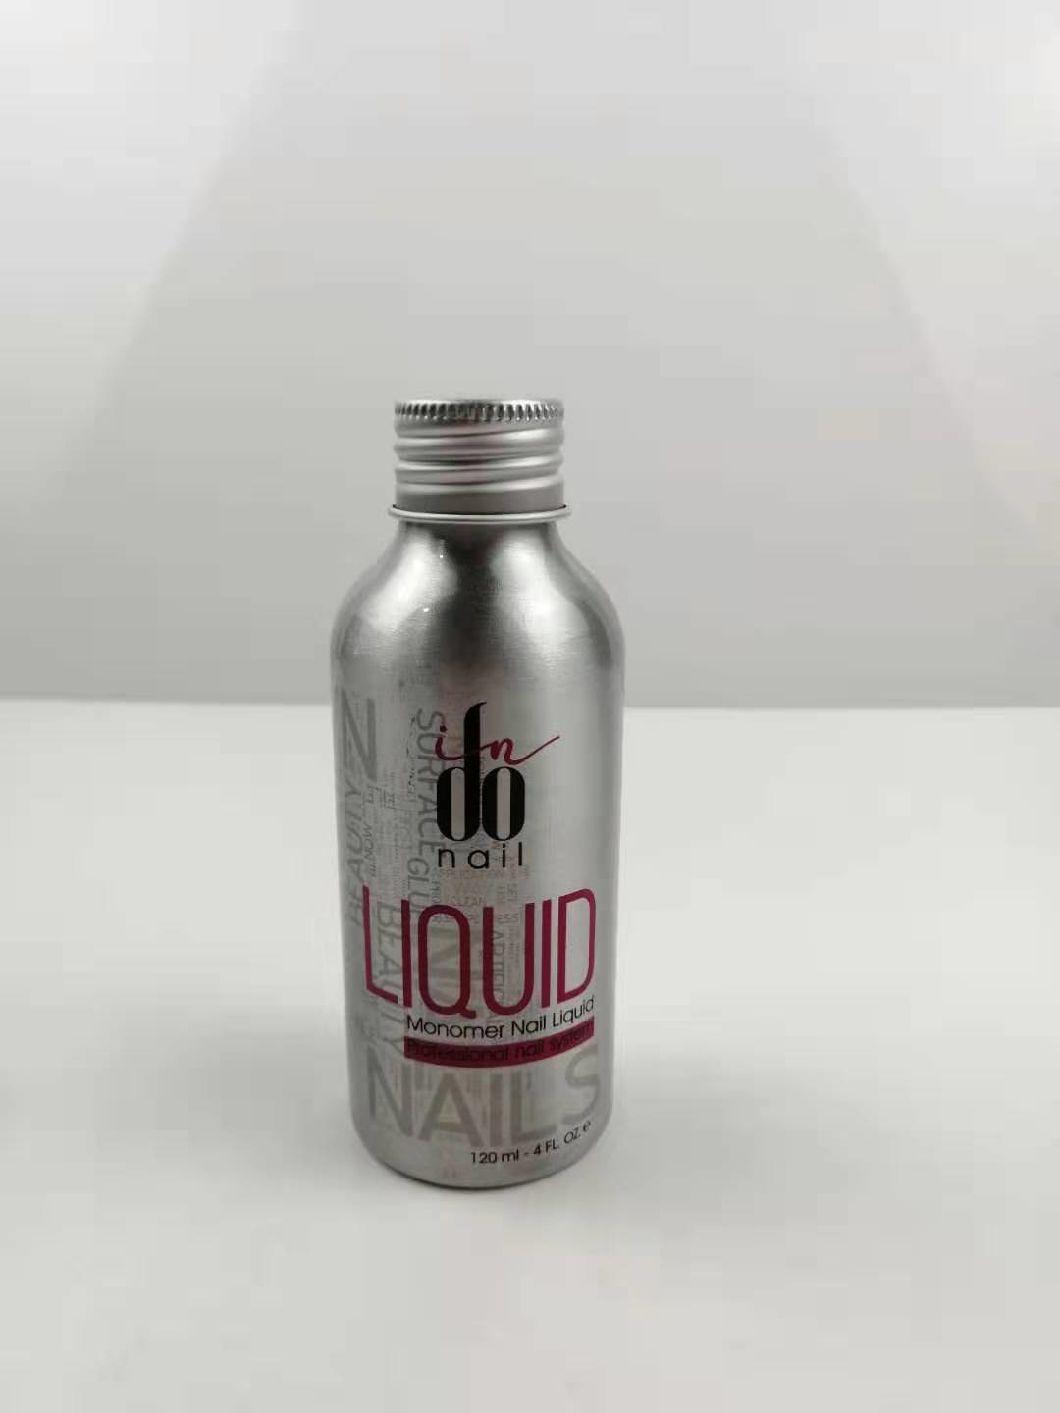 Screw Cap Aluminium Bottle for Alcoholic Drink Packaging